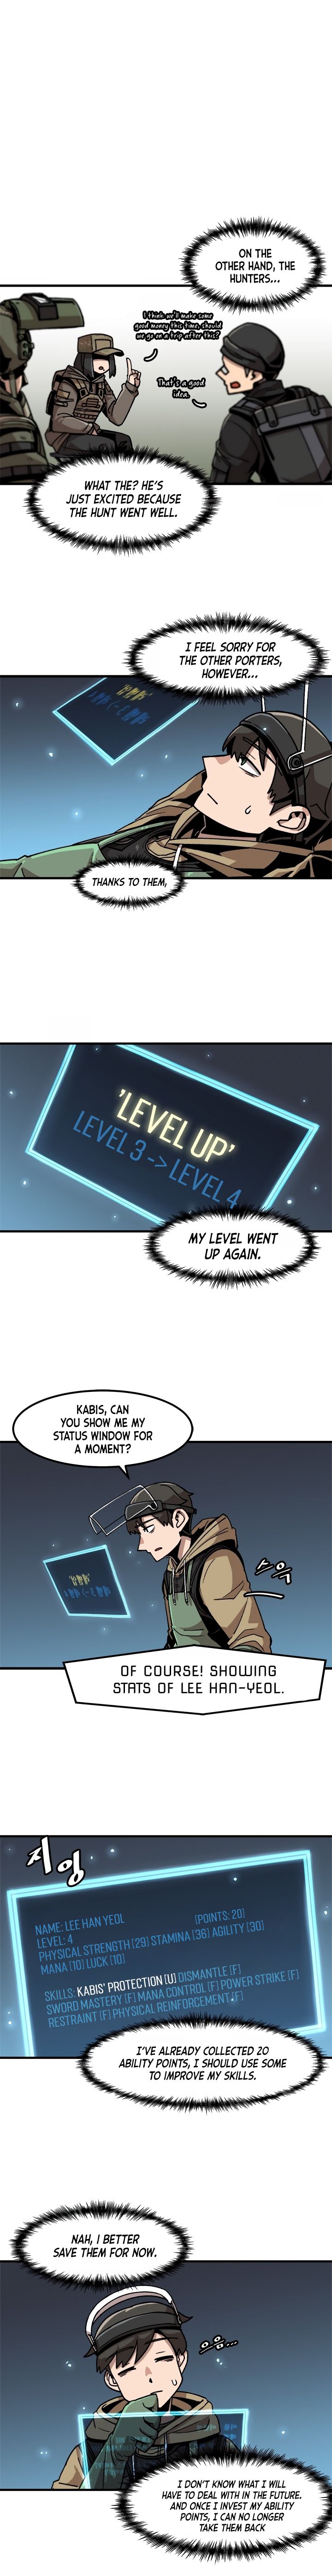 level_up_alone_12_4